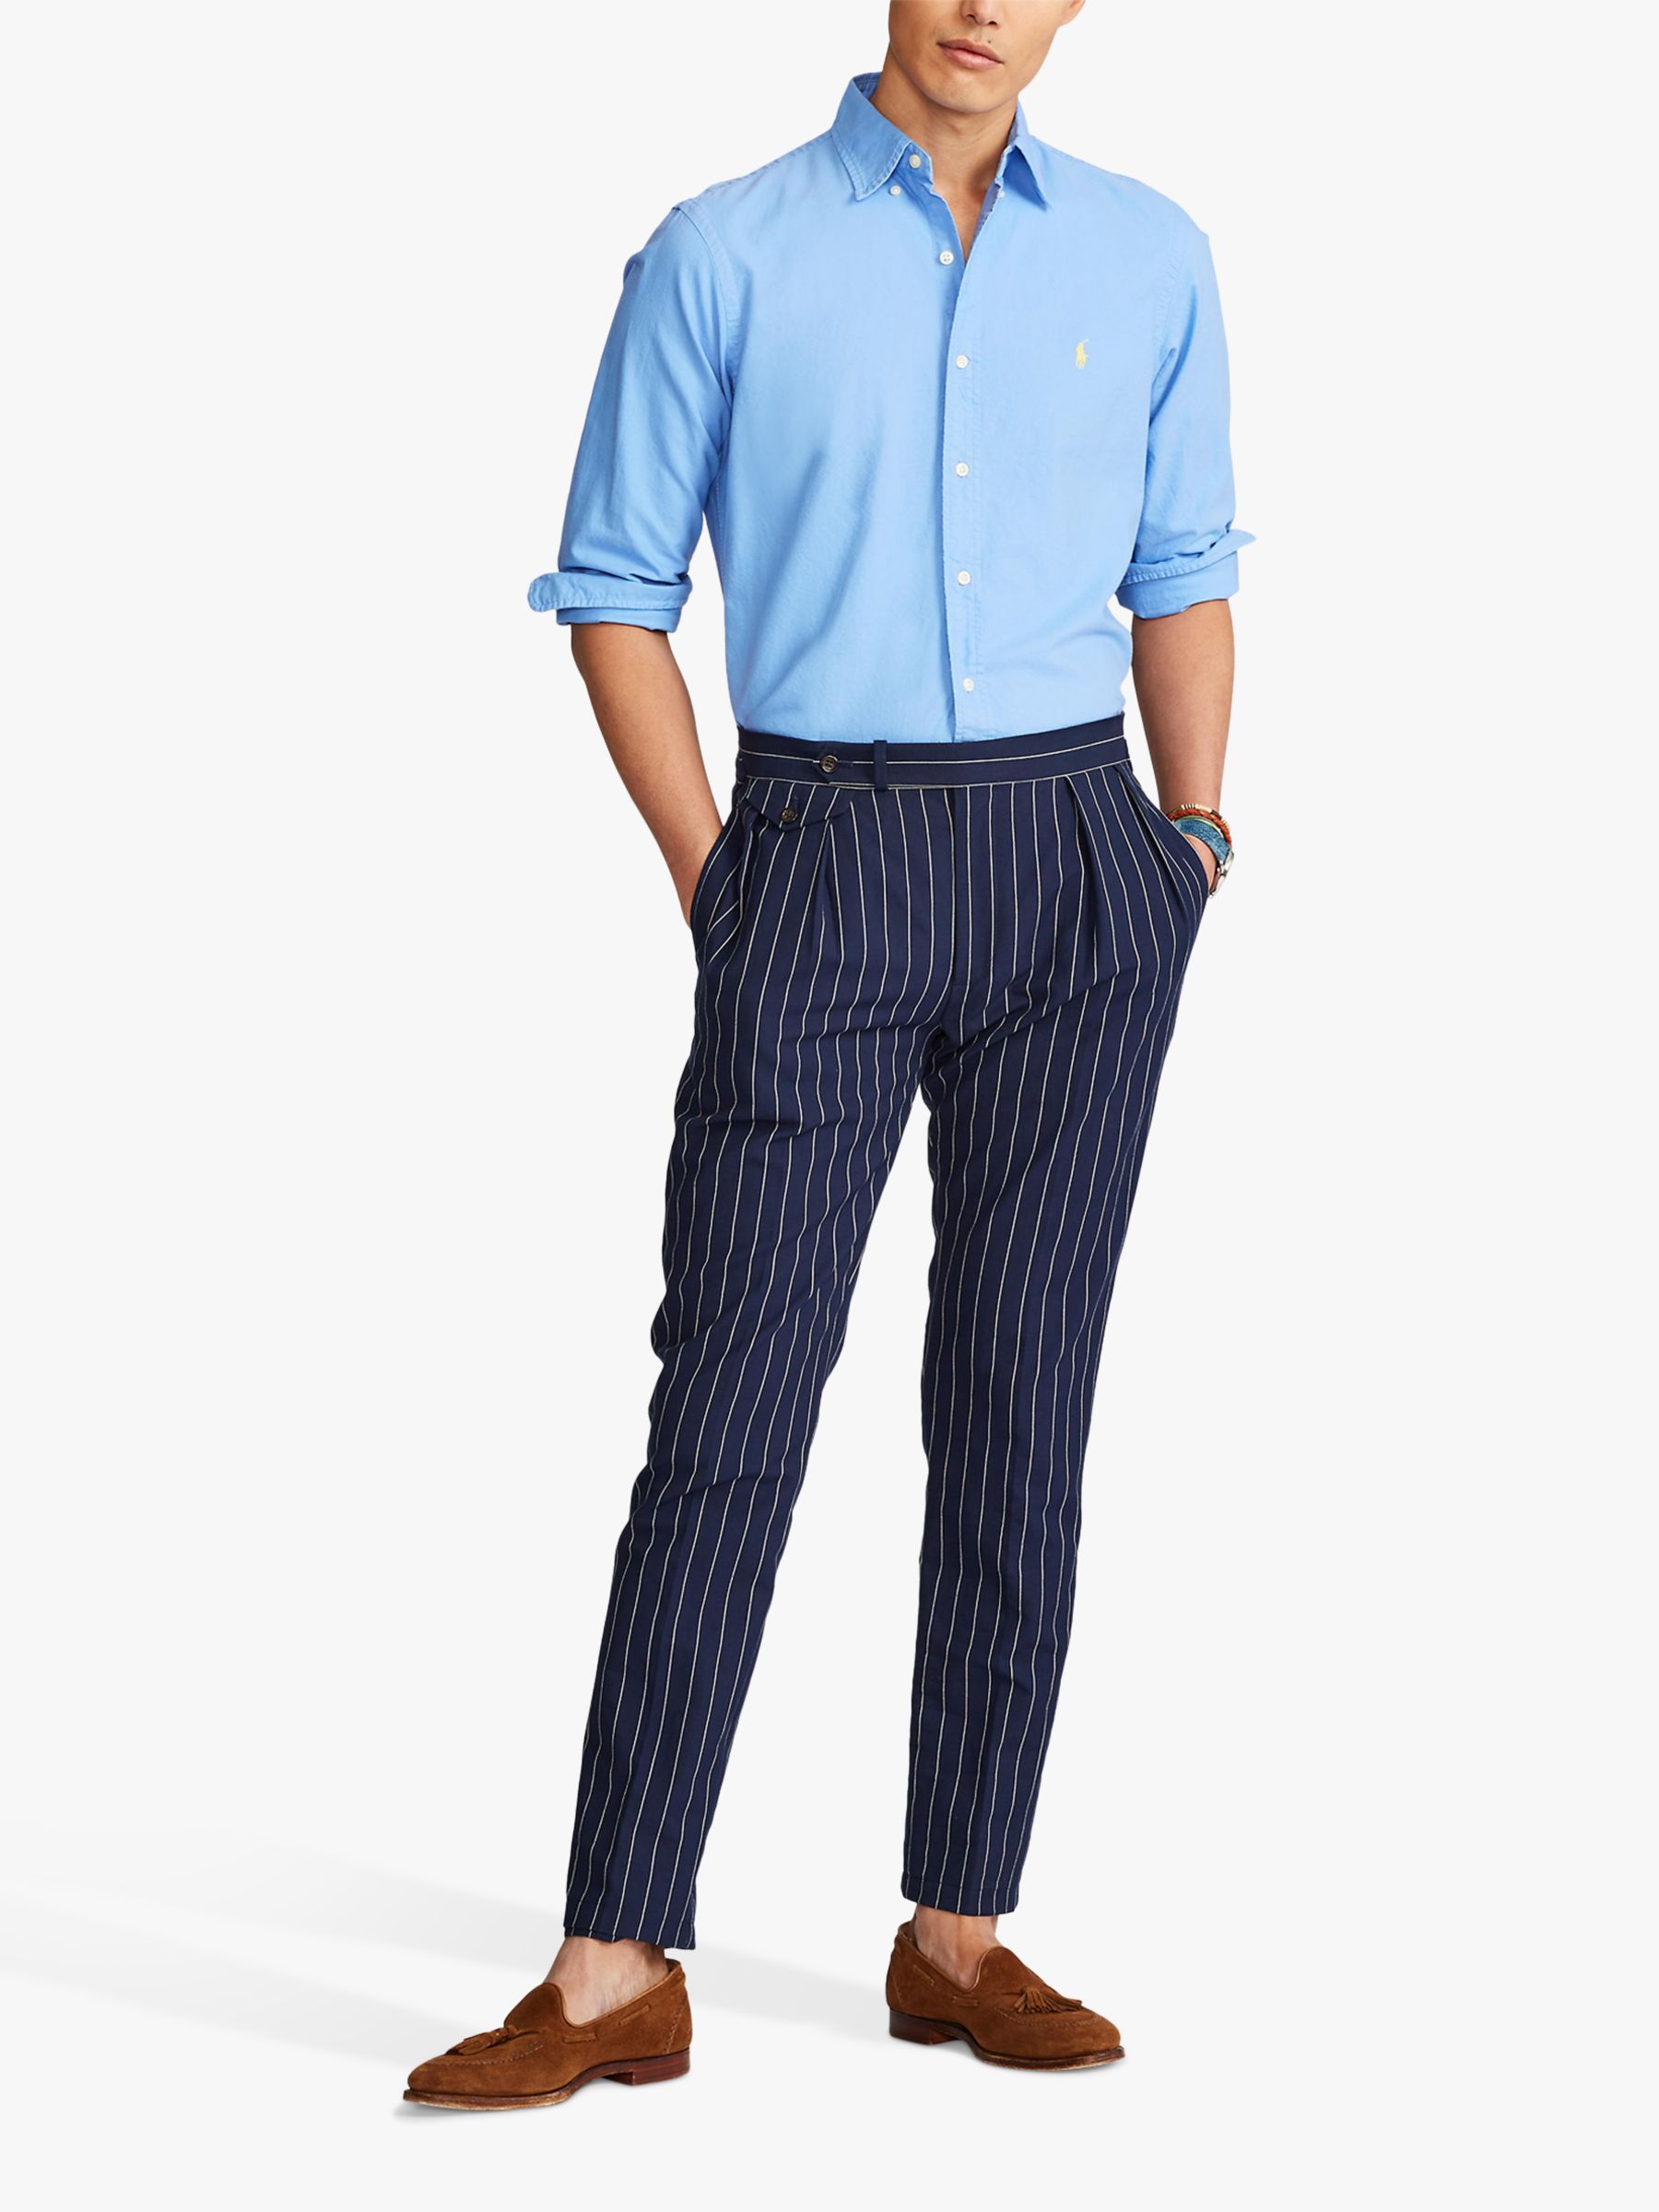 Polo Ralph Lauren Slim Fit Oxford Shirt, Island Blue, S